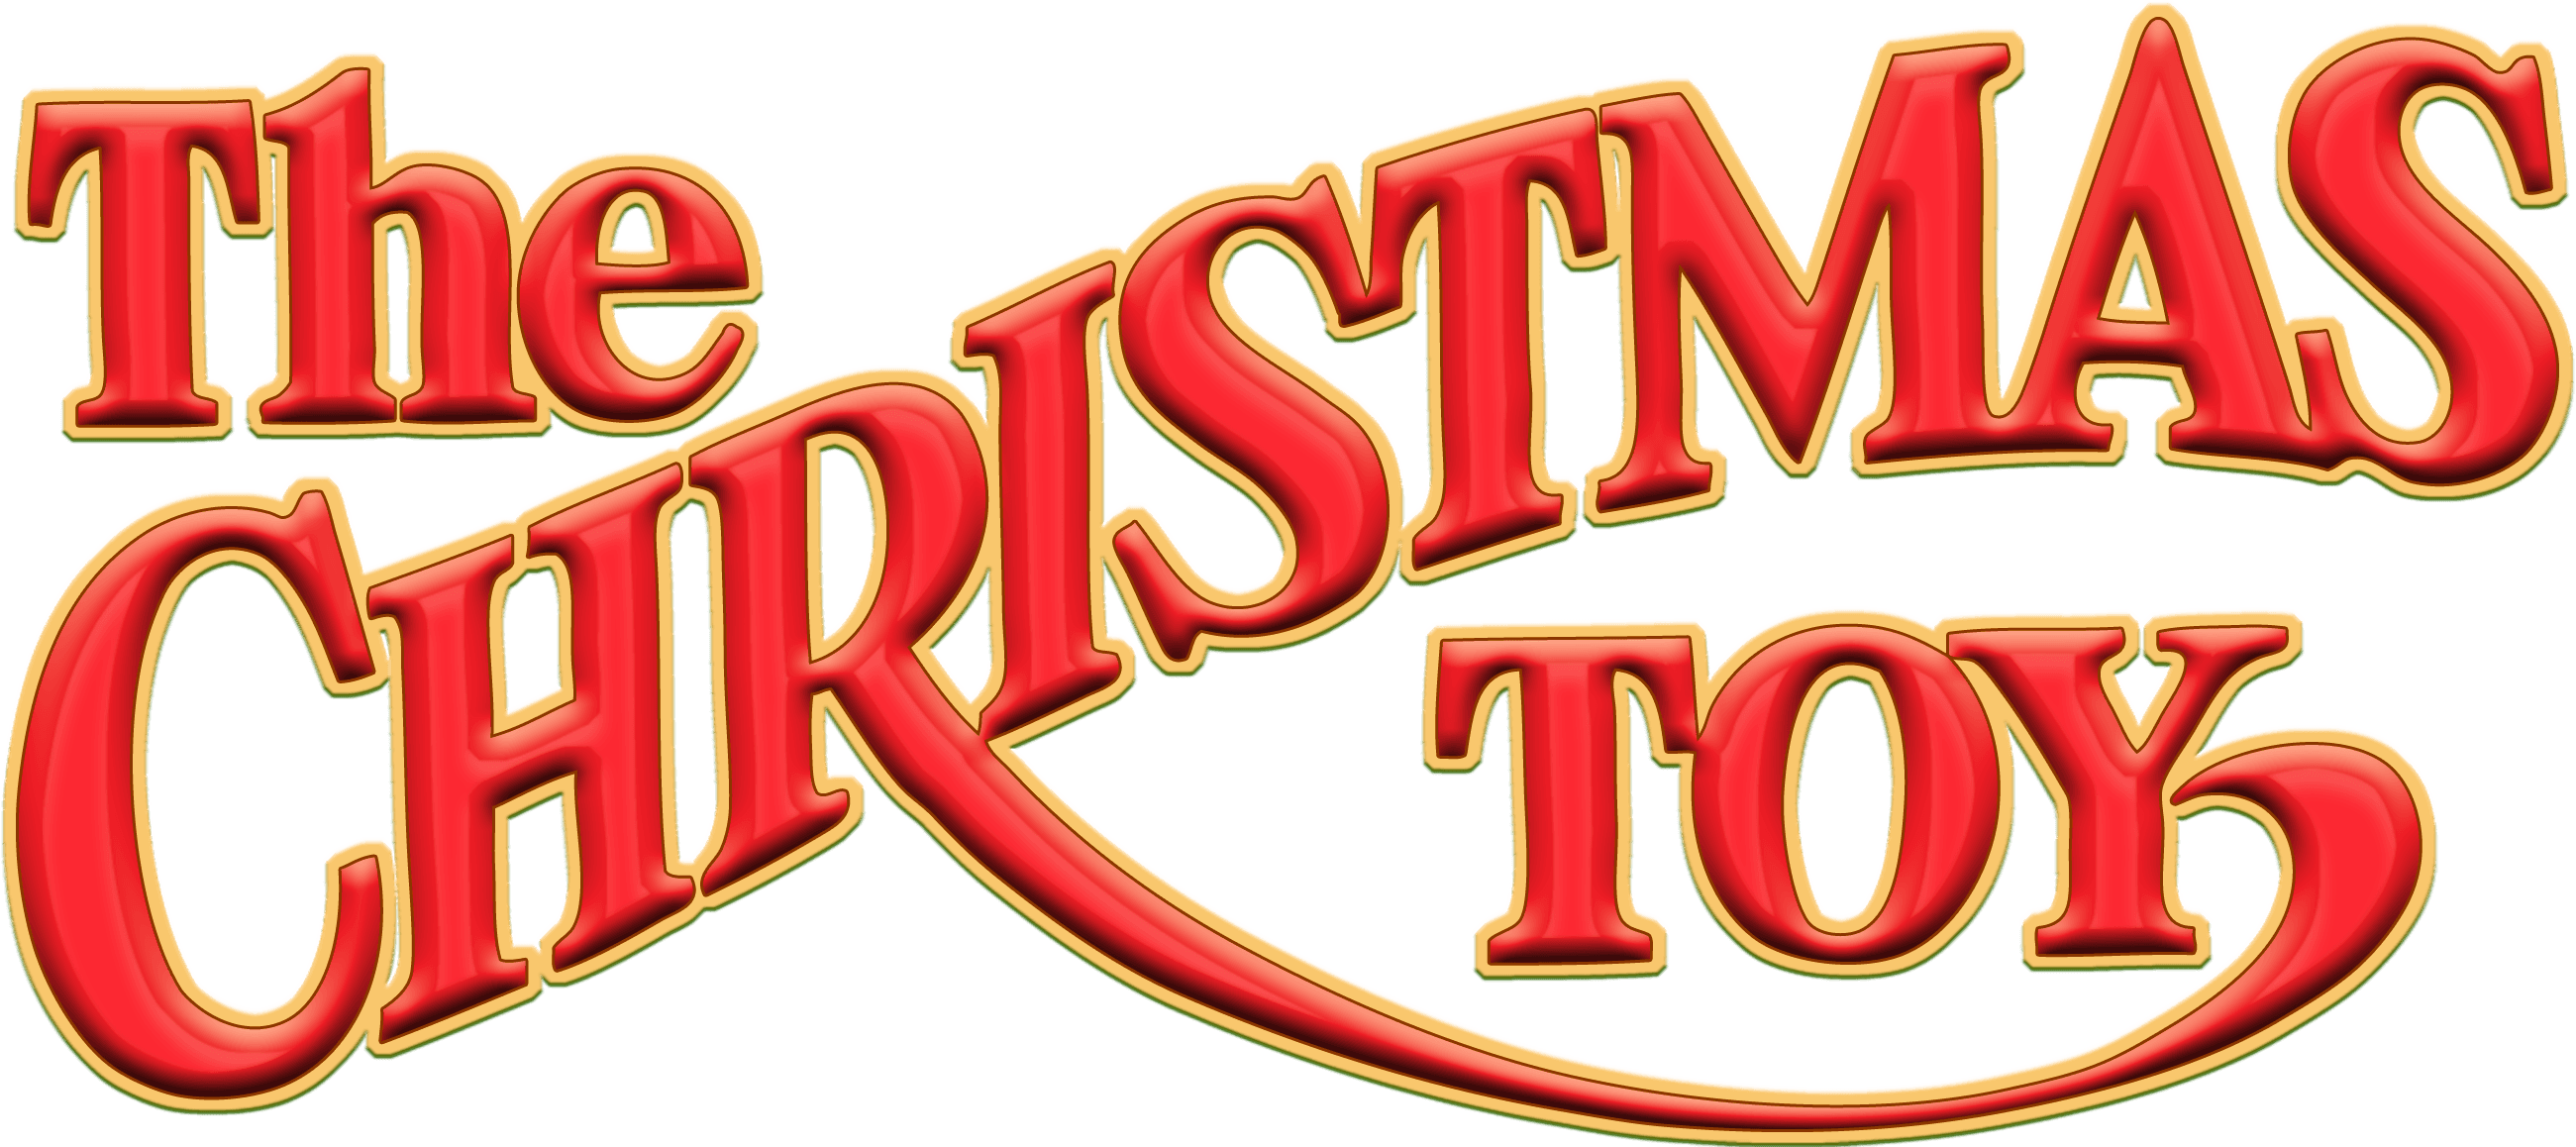 The Christmas Toy logo